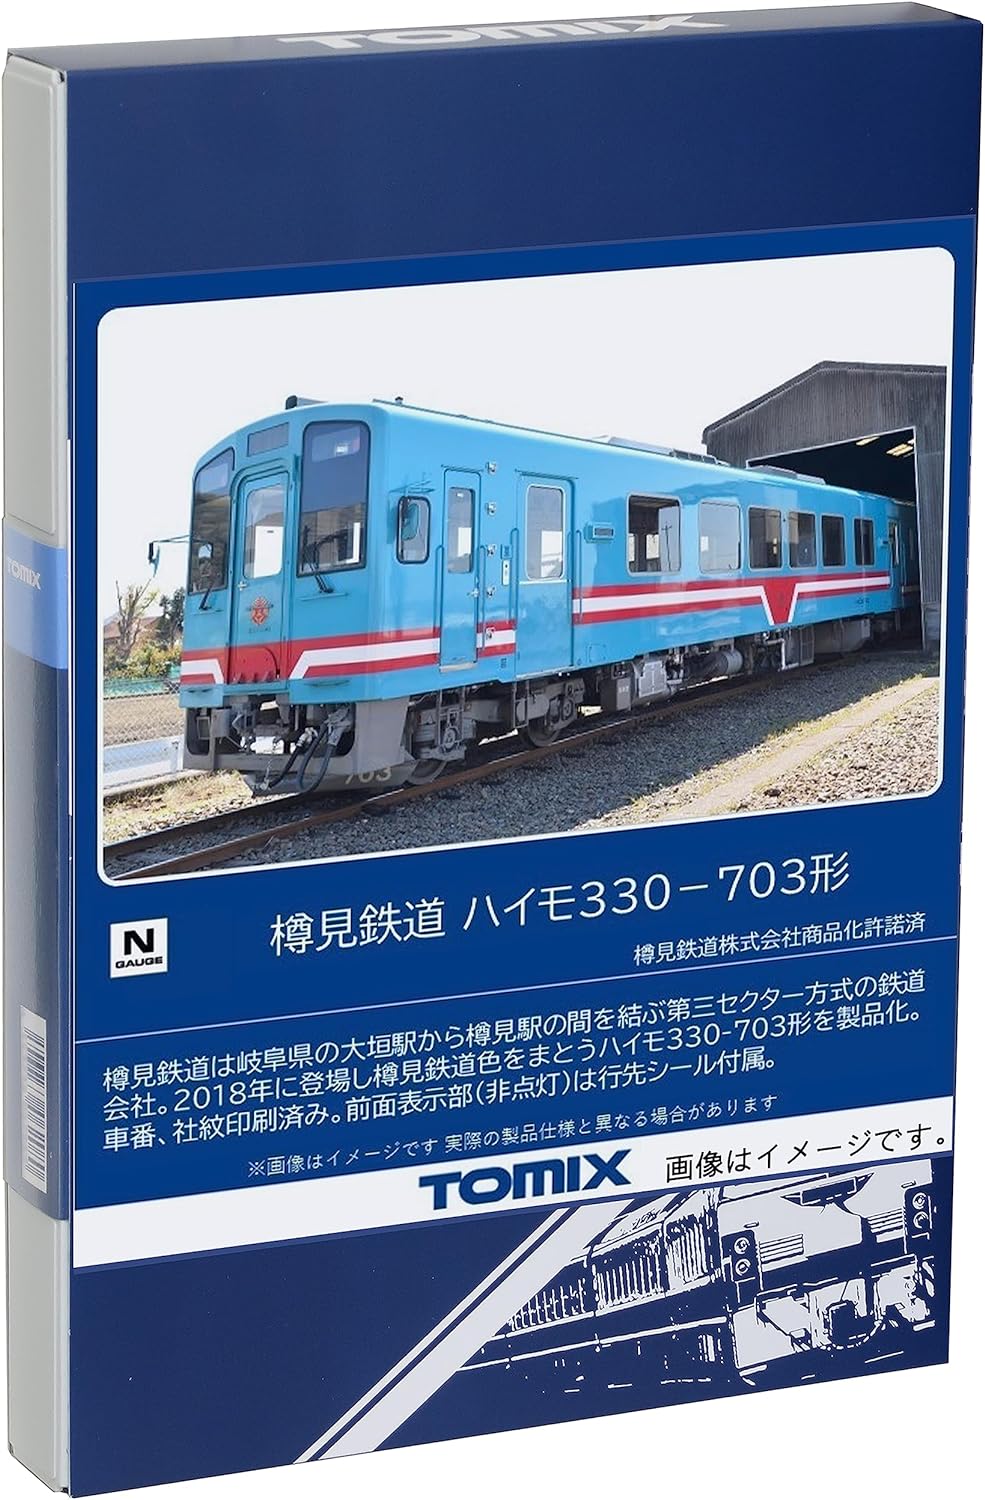 TOMIX 8615 N Gauge Tarumi Railway Haimo 330-703 Model Railway Diesel Car - BanzaiHobby